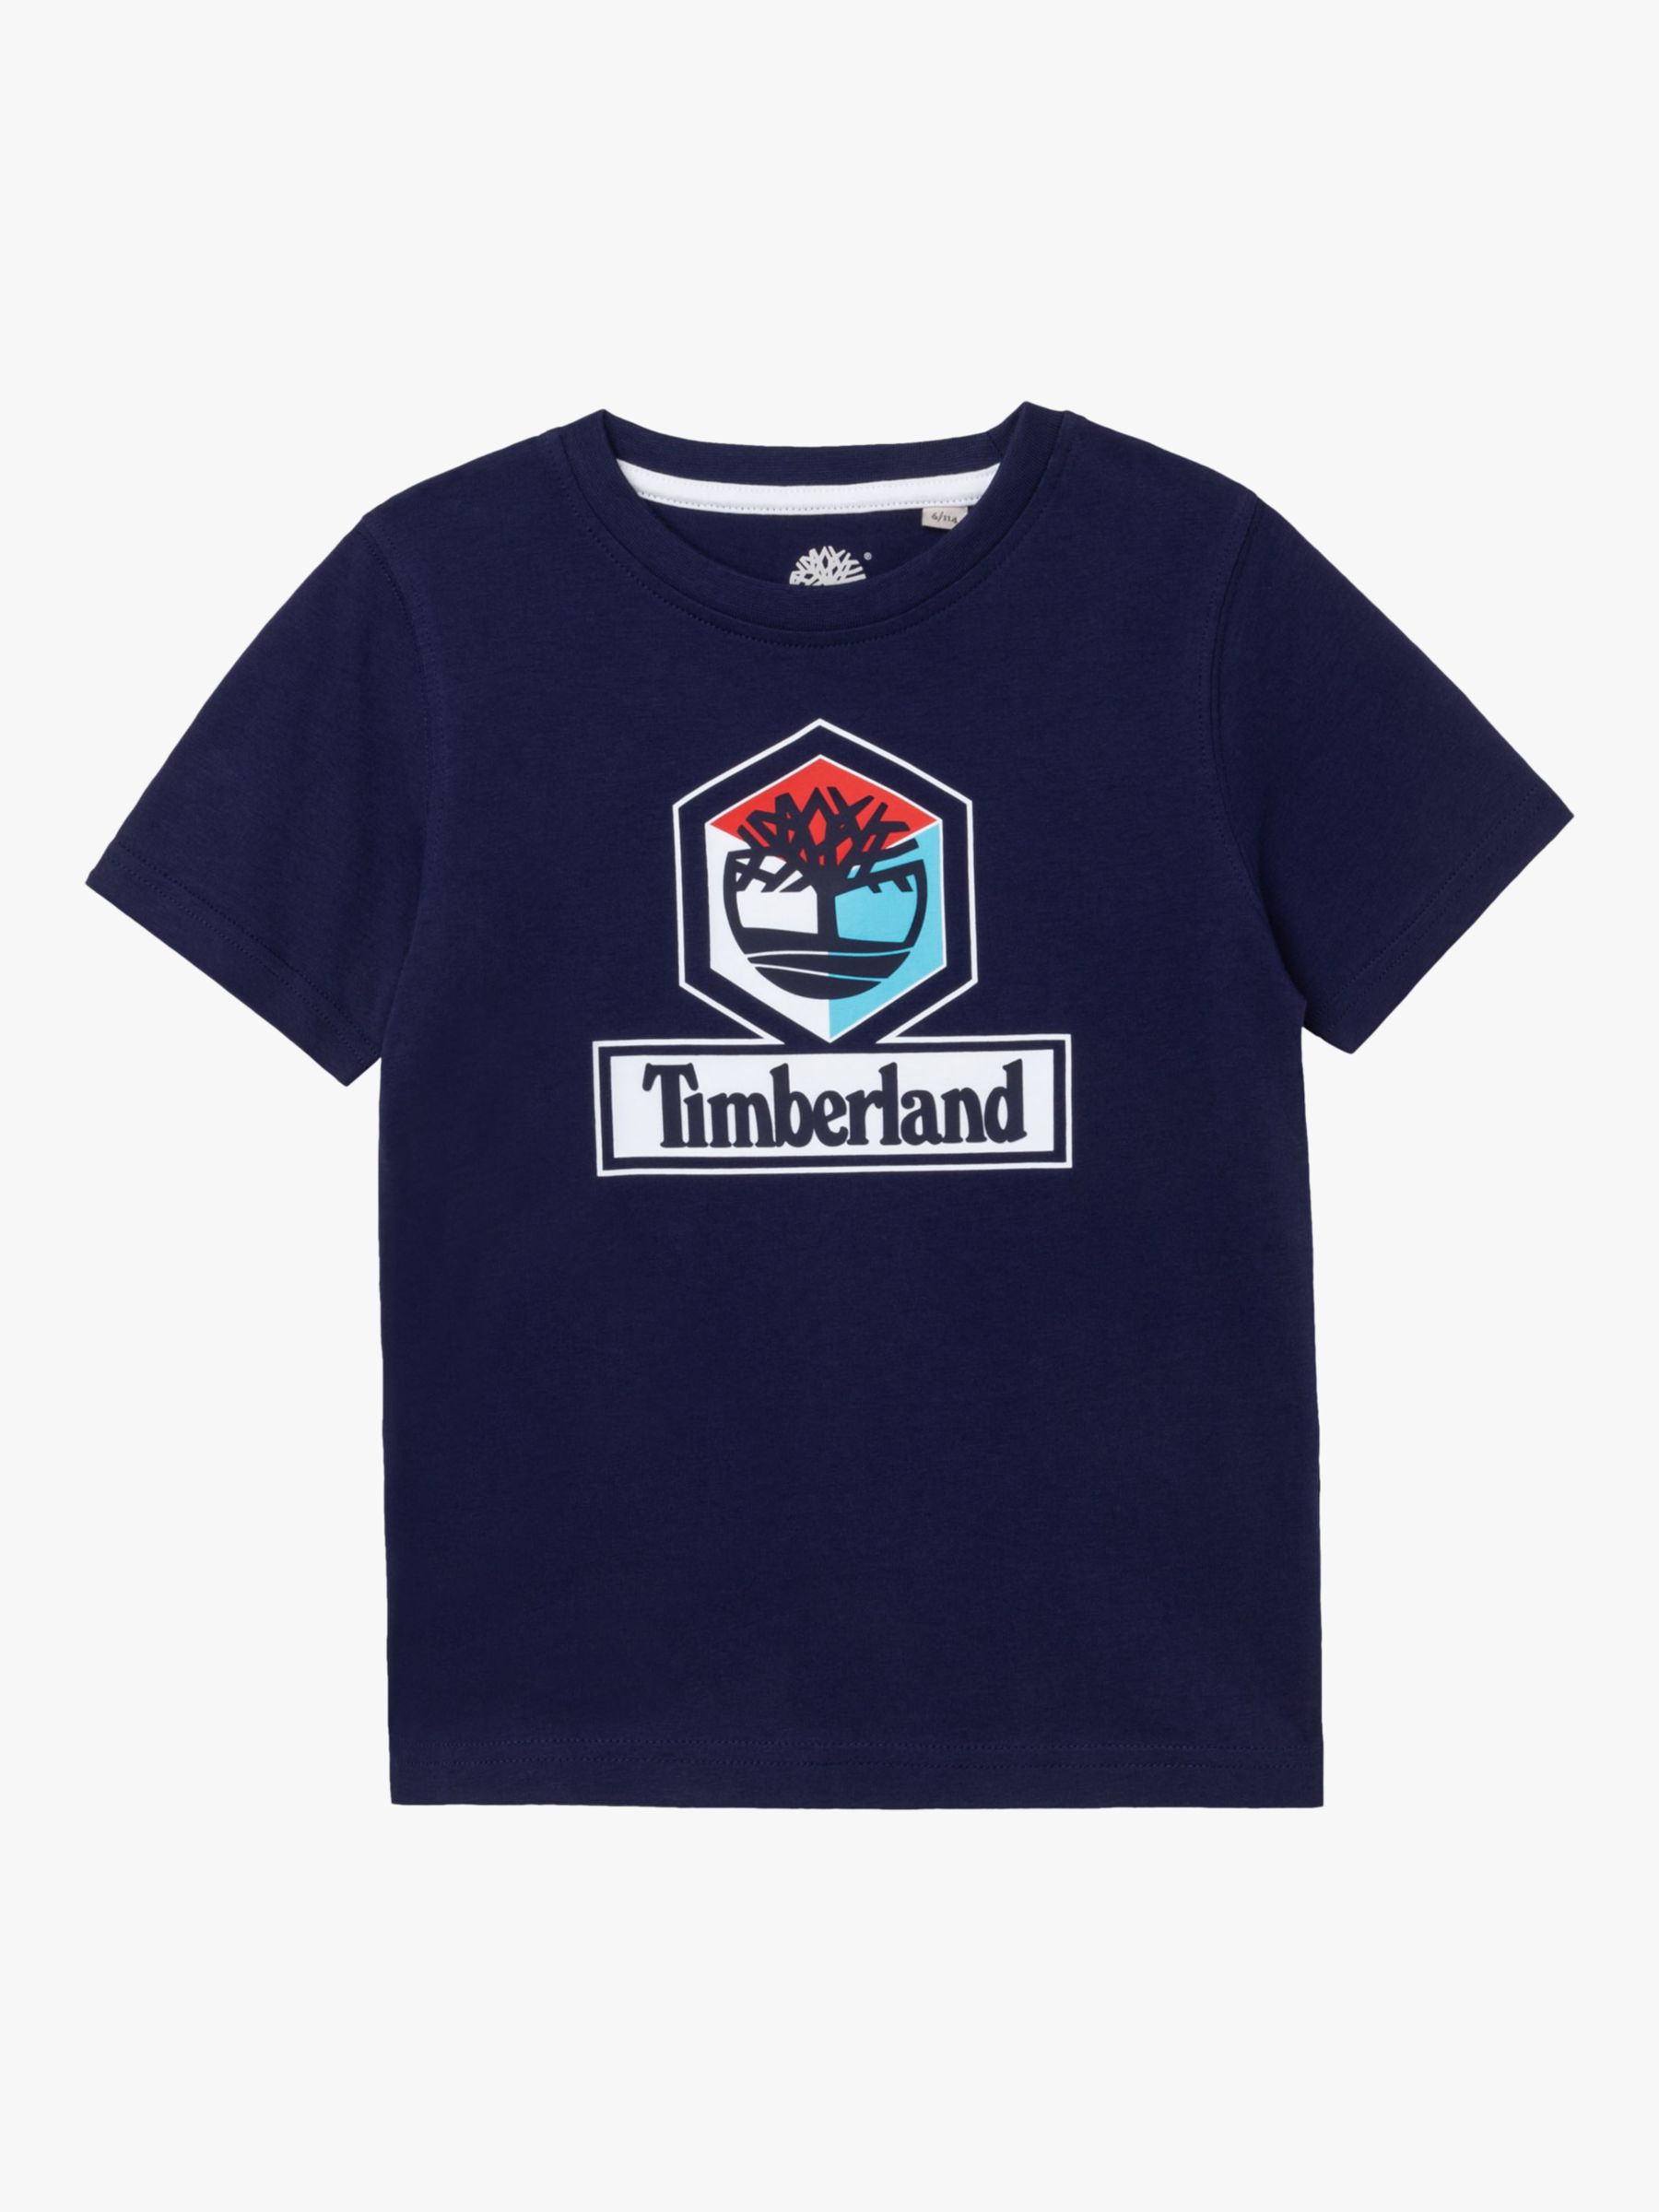 Timberland Kids' Cotton Logo T-Shirt, Navy at John Lewis & Partners